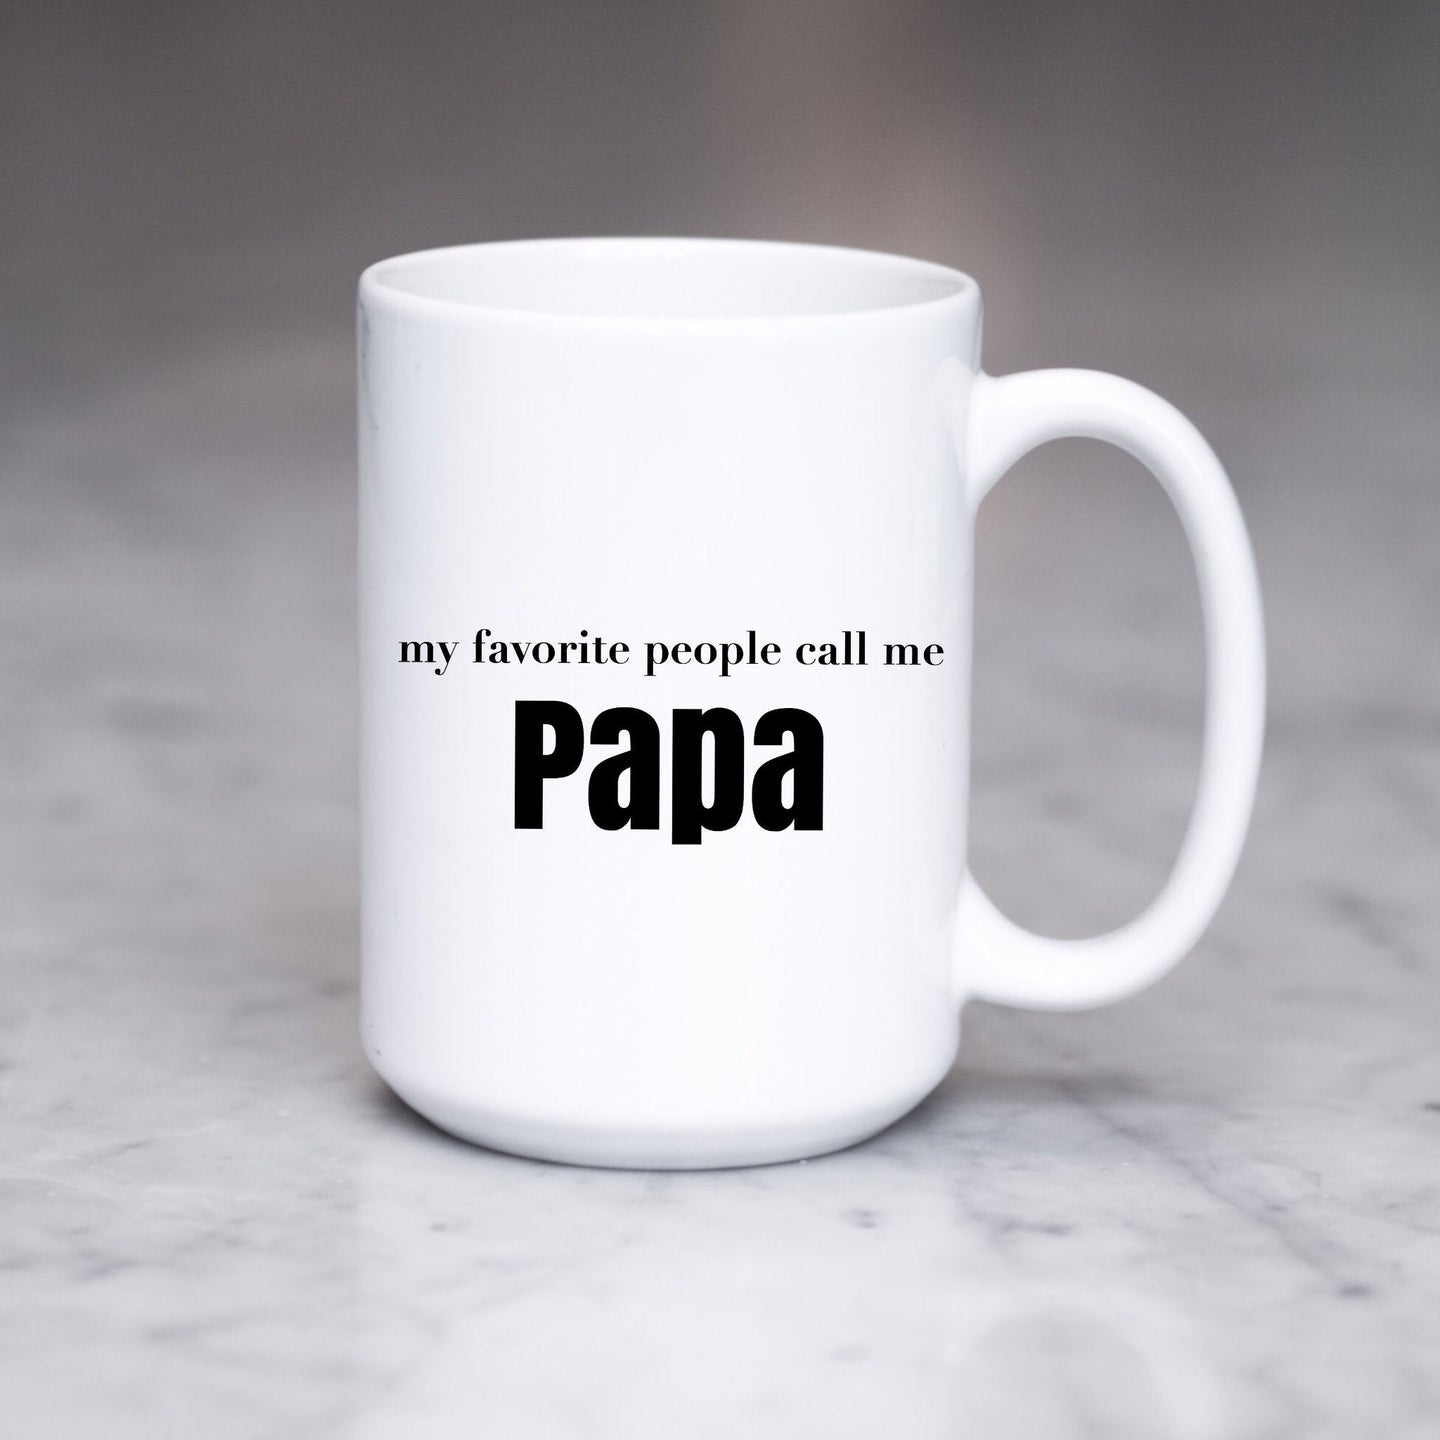 My favorite people call me Papa